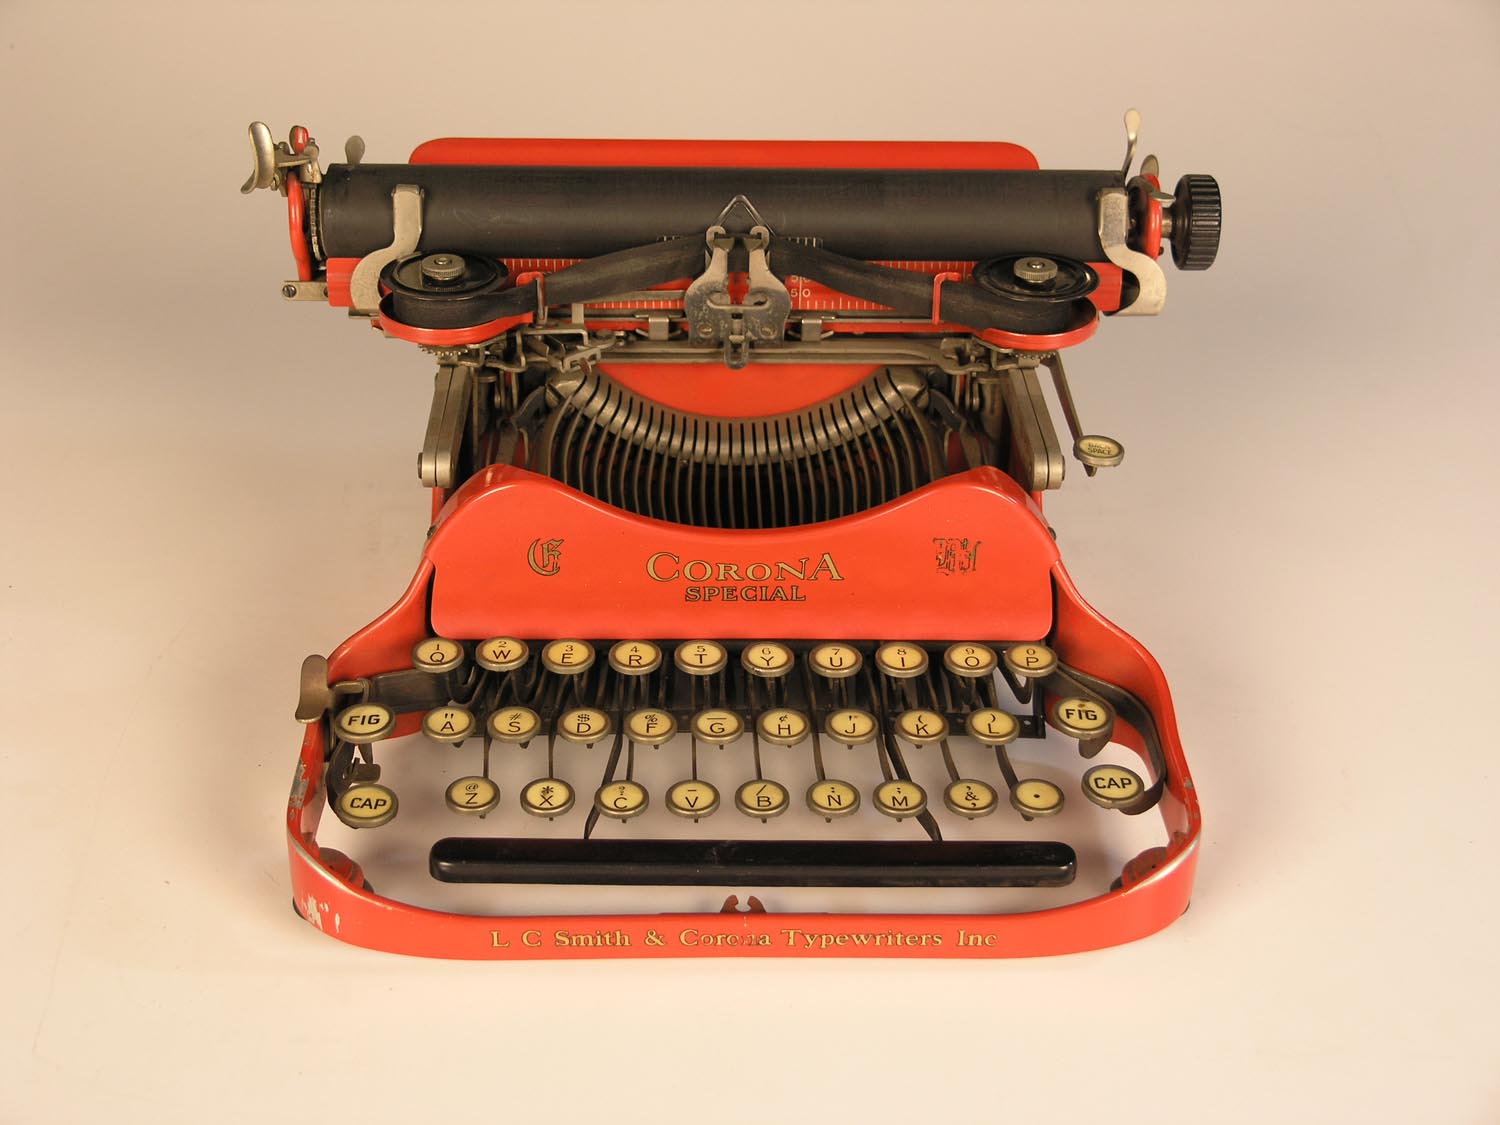 Corona Model 3 typewriter